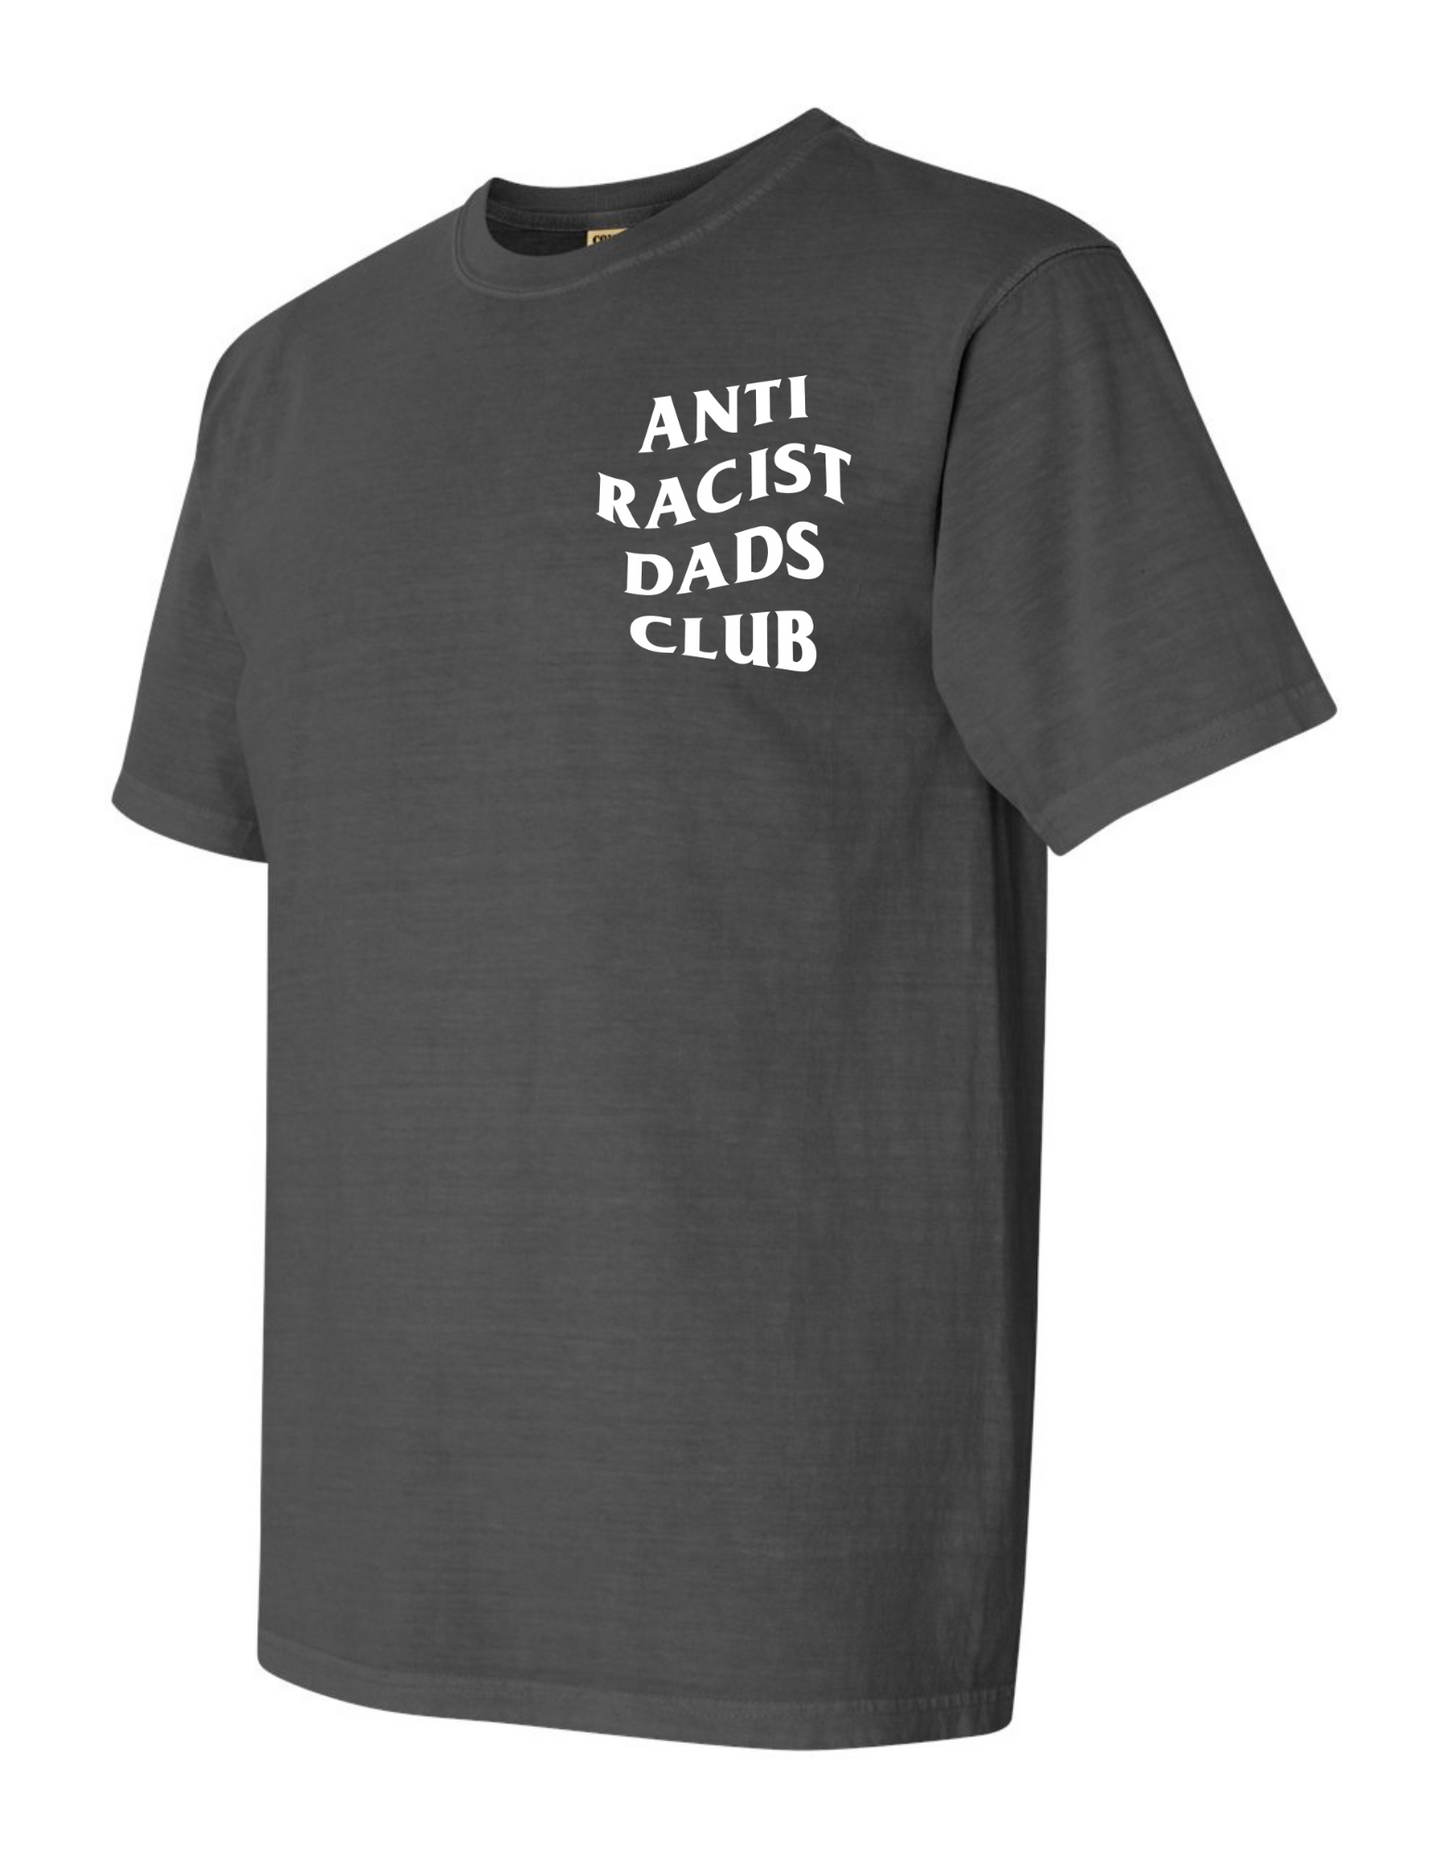 Antiracist Dads Club Tee